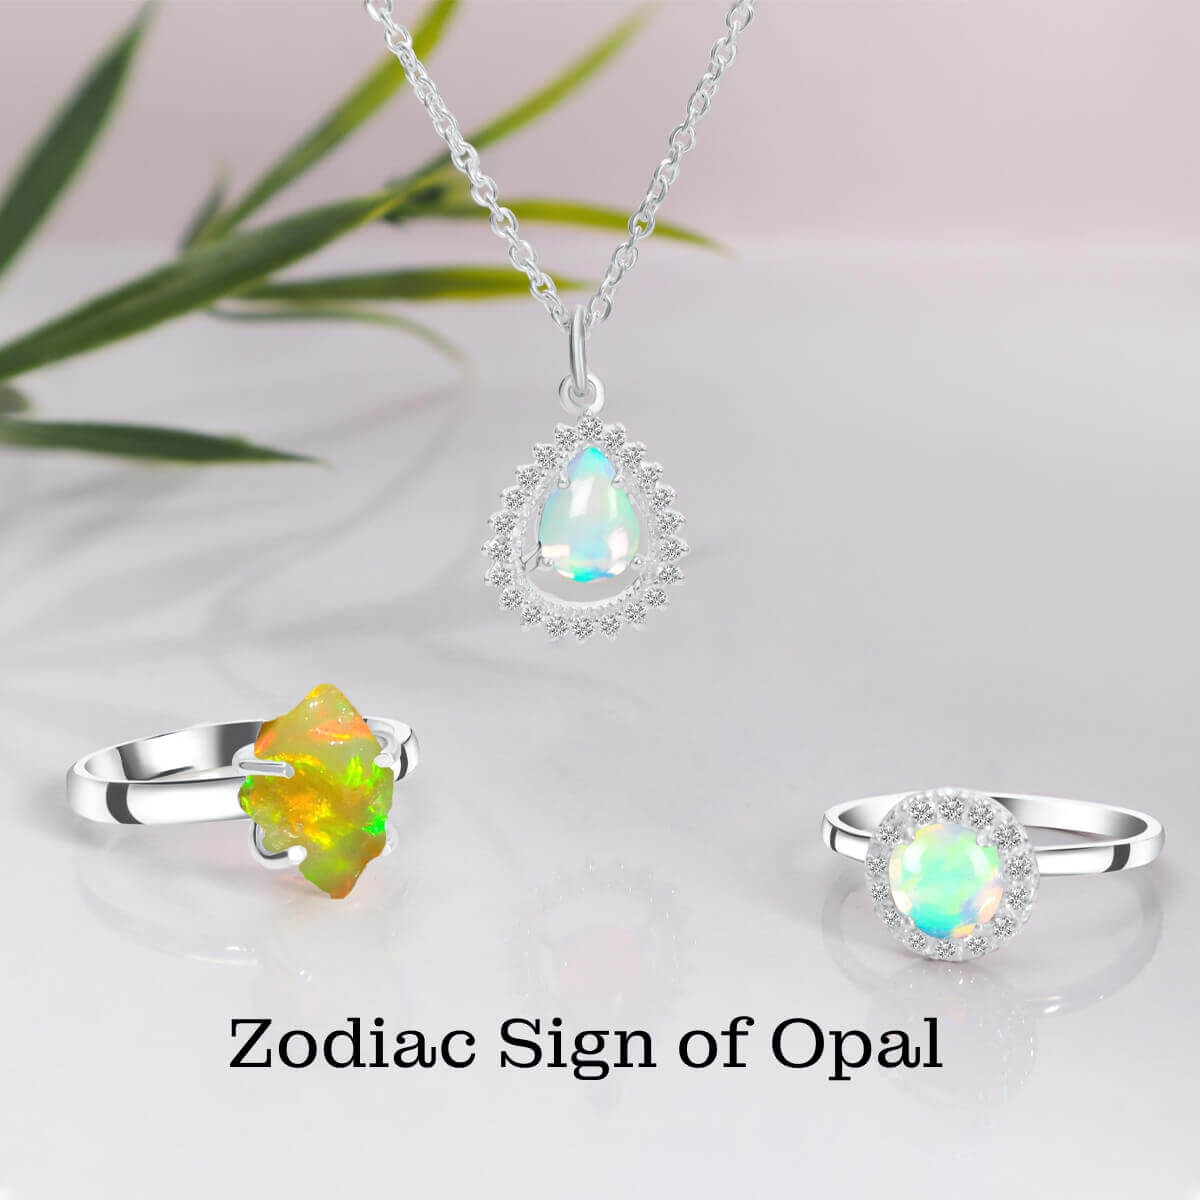 Zodiac Sign Associated to Opal